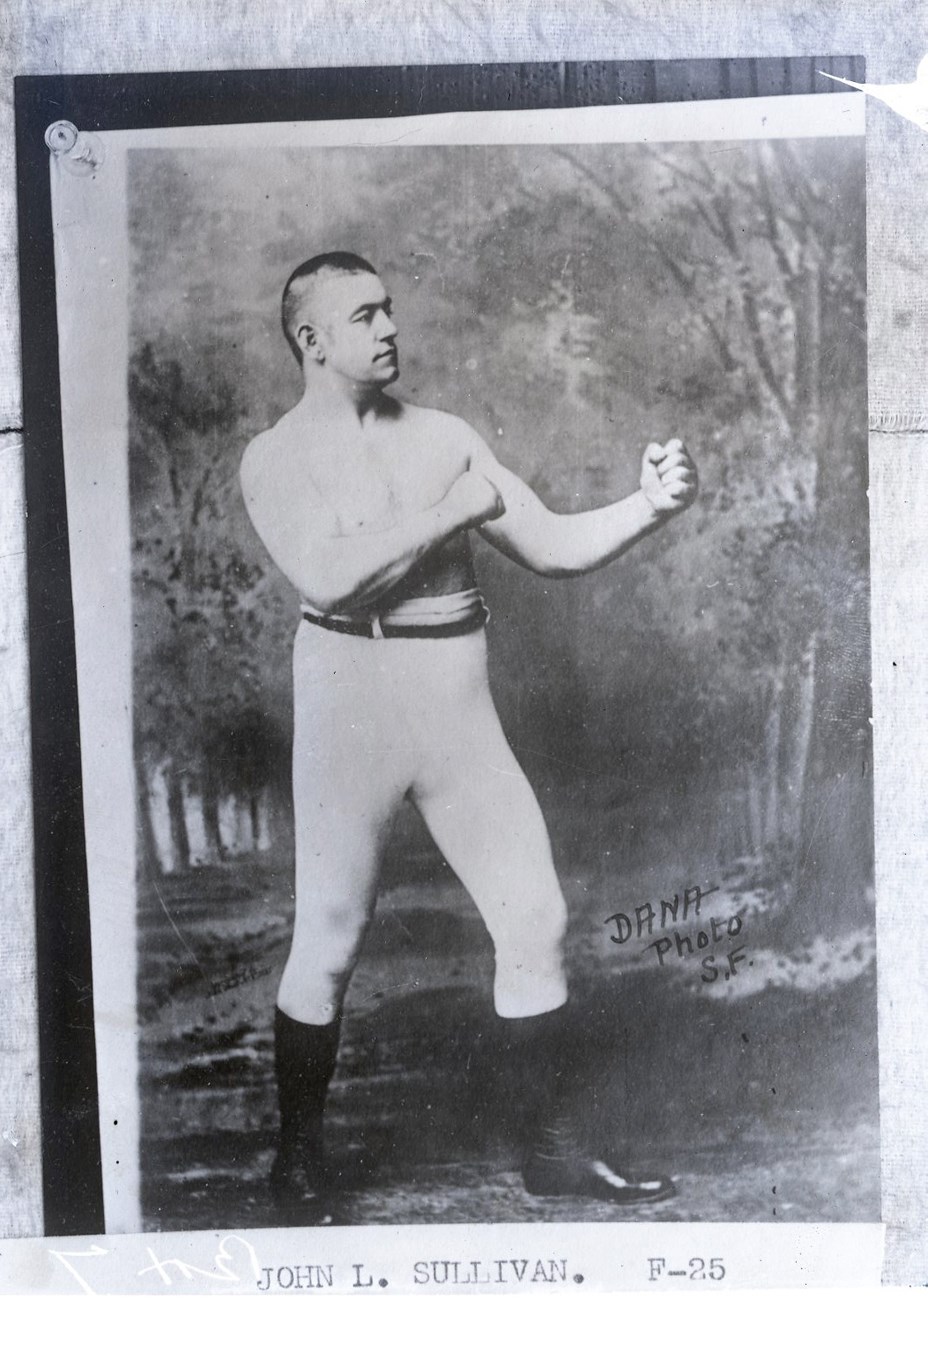 Dana Collection Of Important Boxing Negatives - 1890s Legendary Boxer John L. Sullivan Glass Plate Copy Negatives by Dana Studio (6)